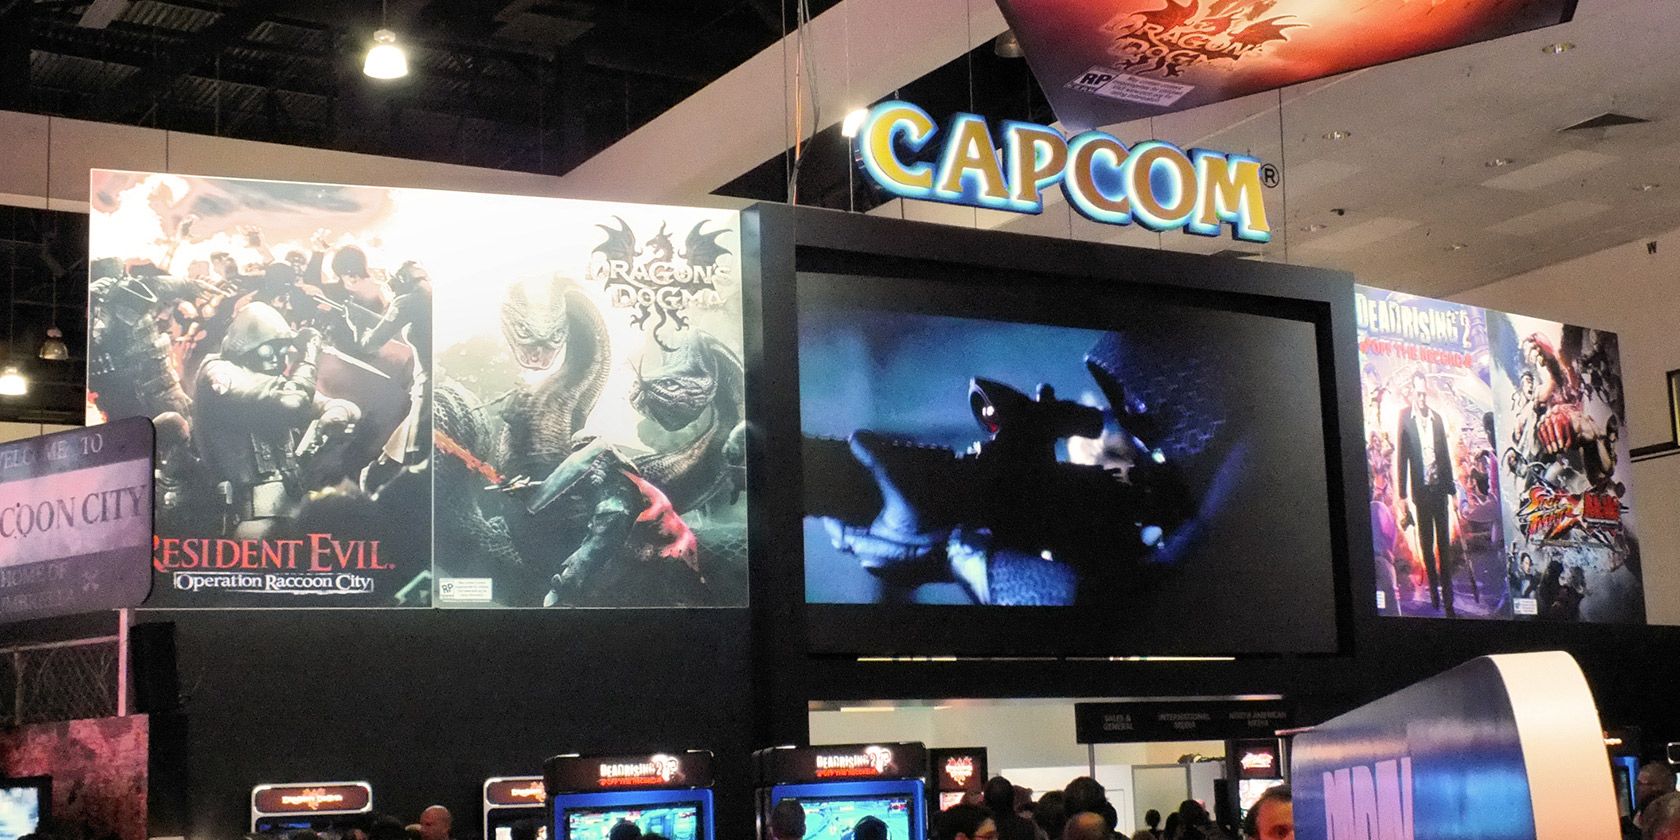 Capcom booth at E3 2011